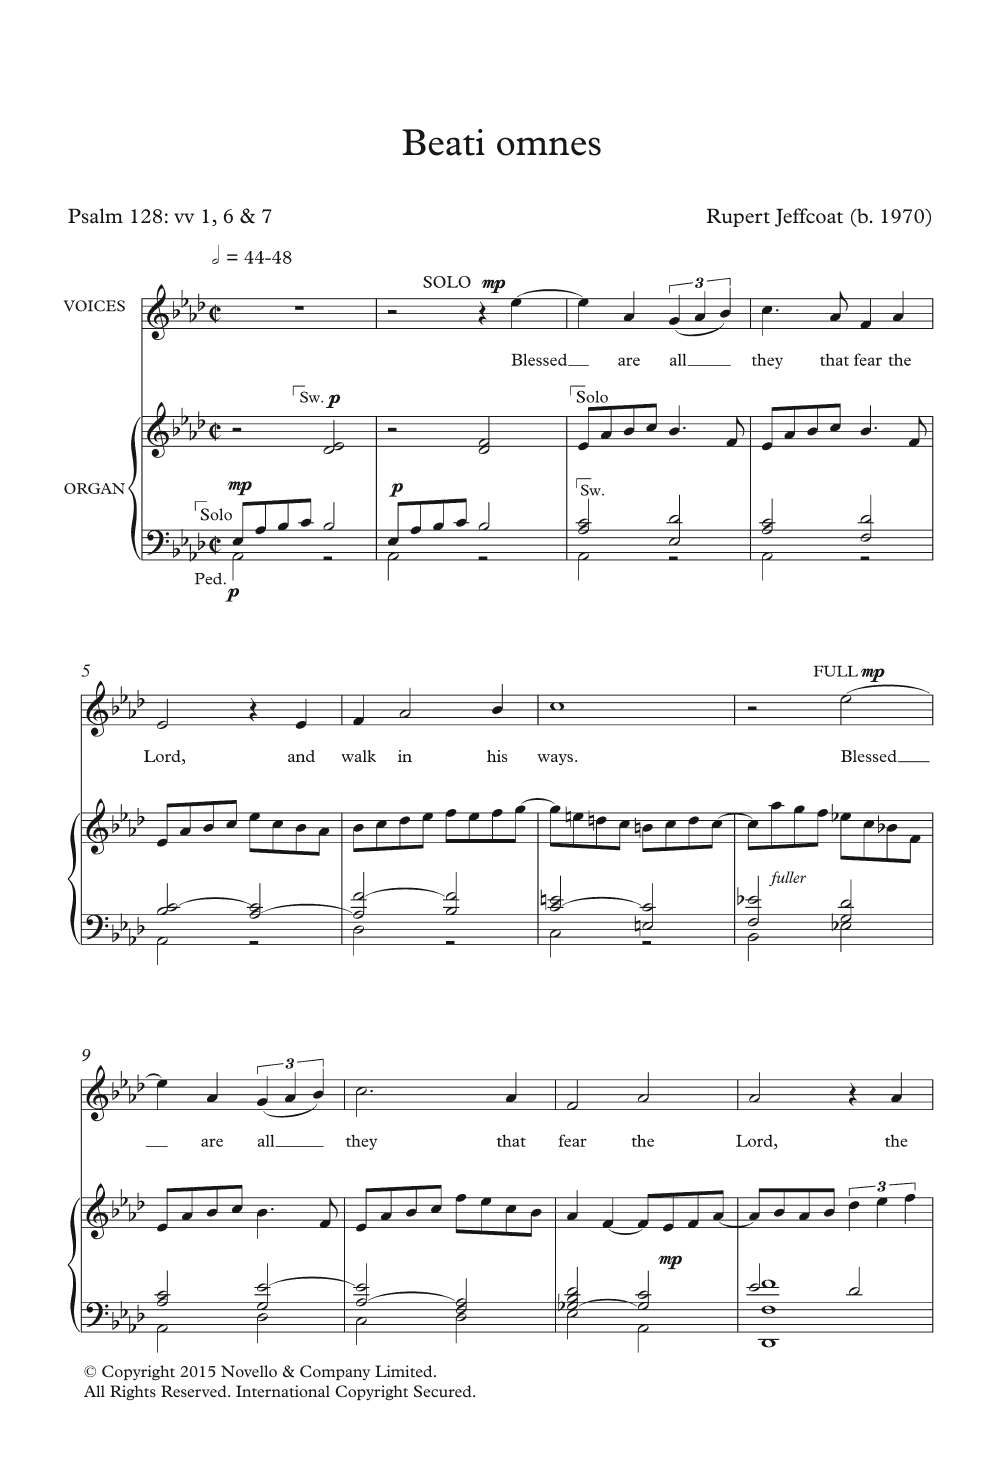 Rupert Jeffcoat Beati Omnes Sheet Music Notes & Chords for Unison Choral - Download or Print PDF